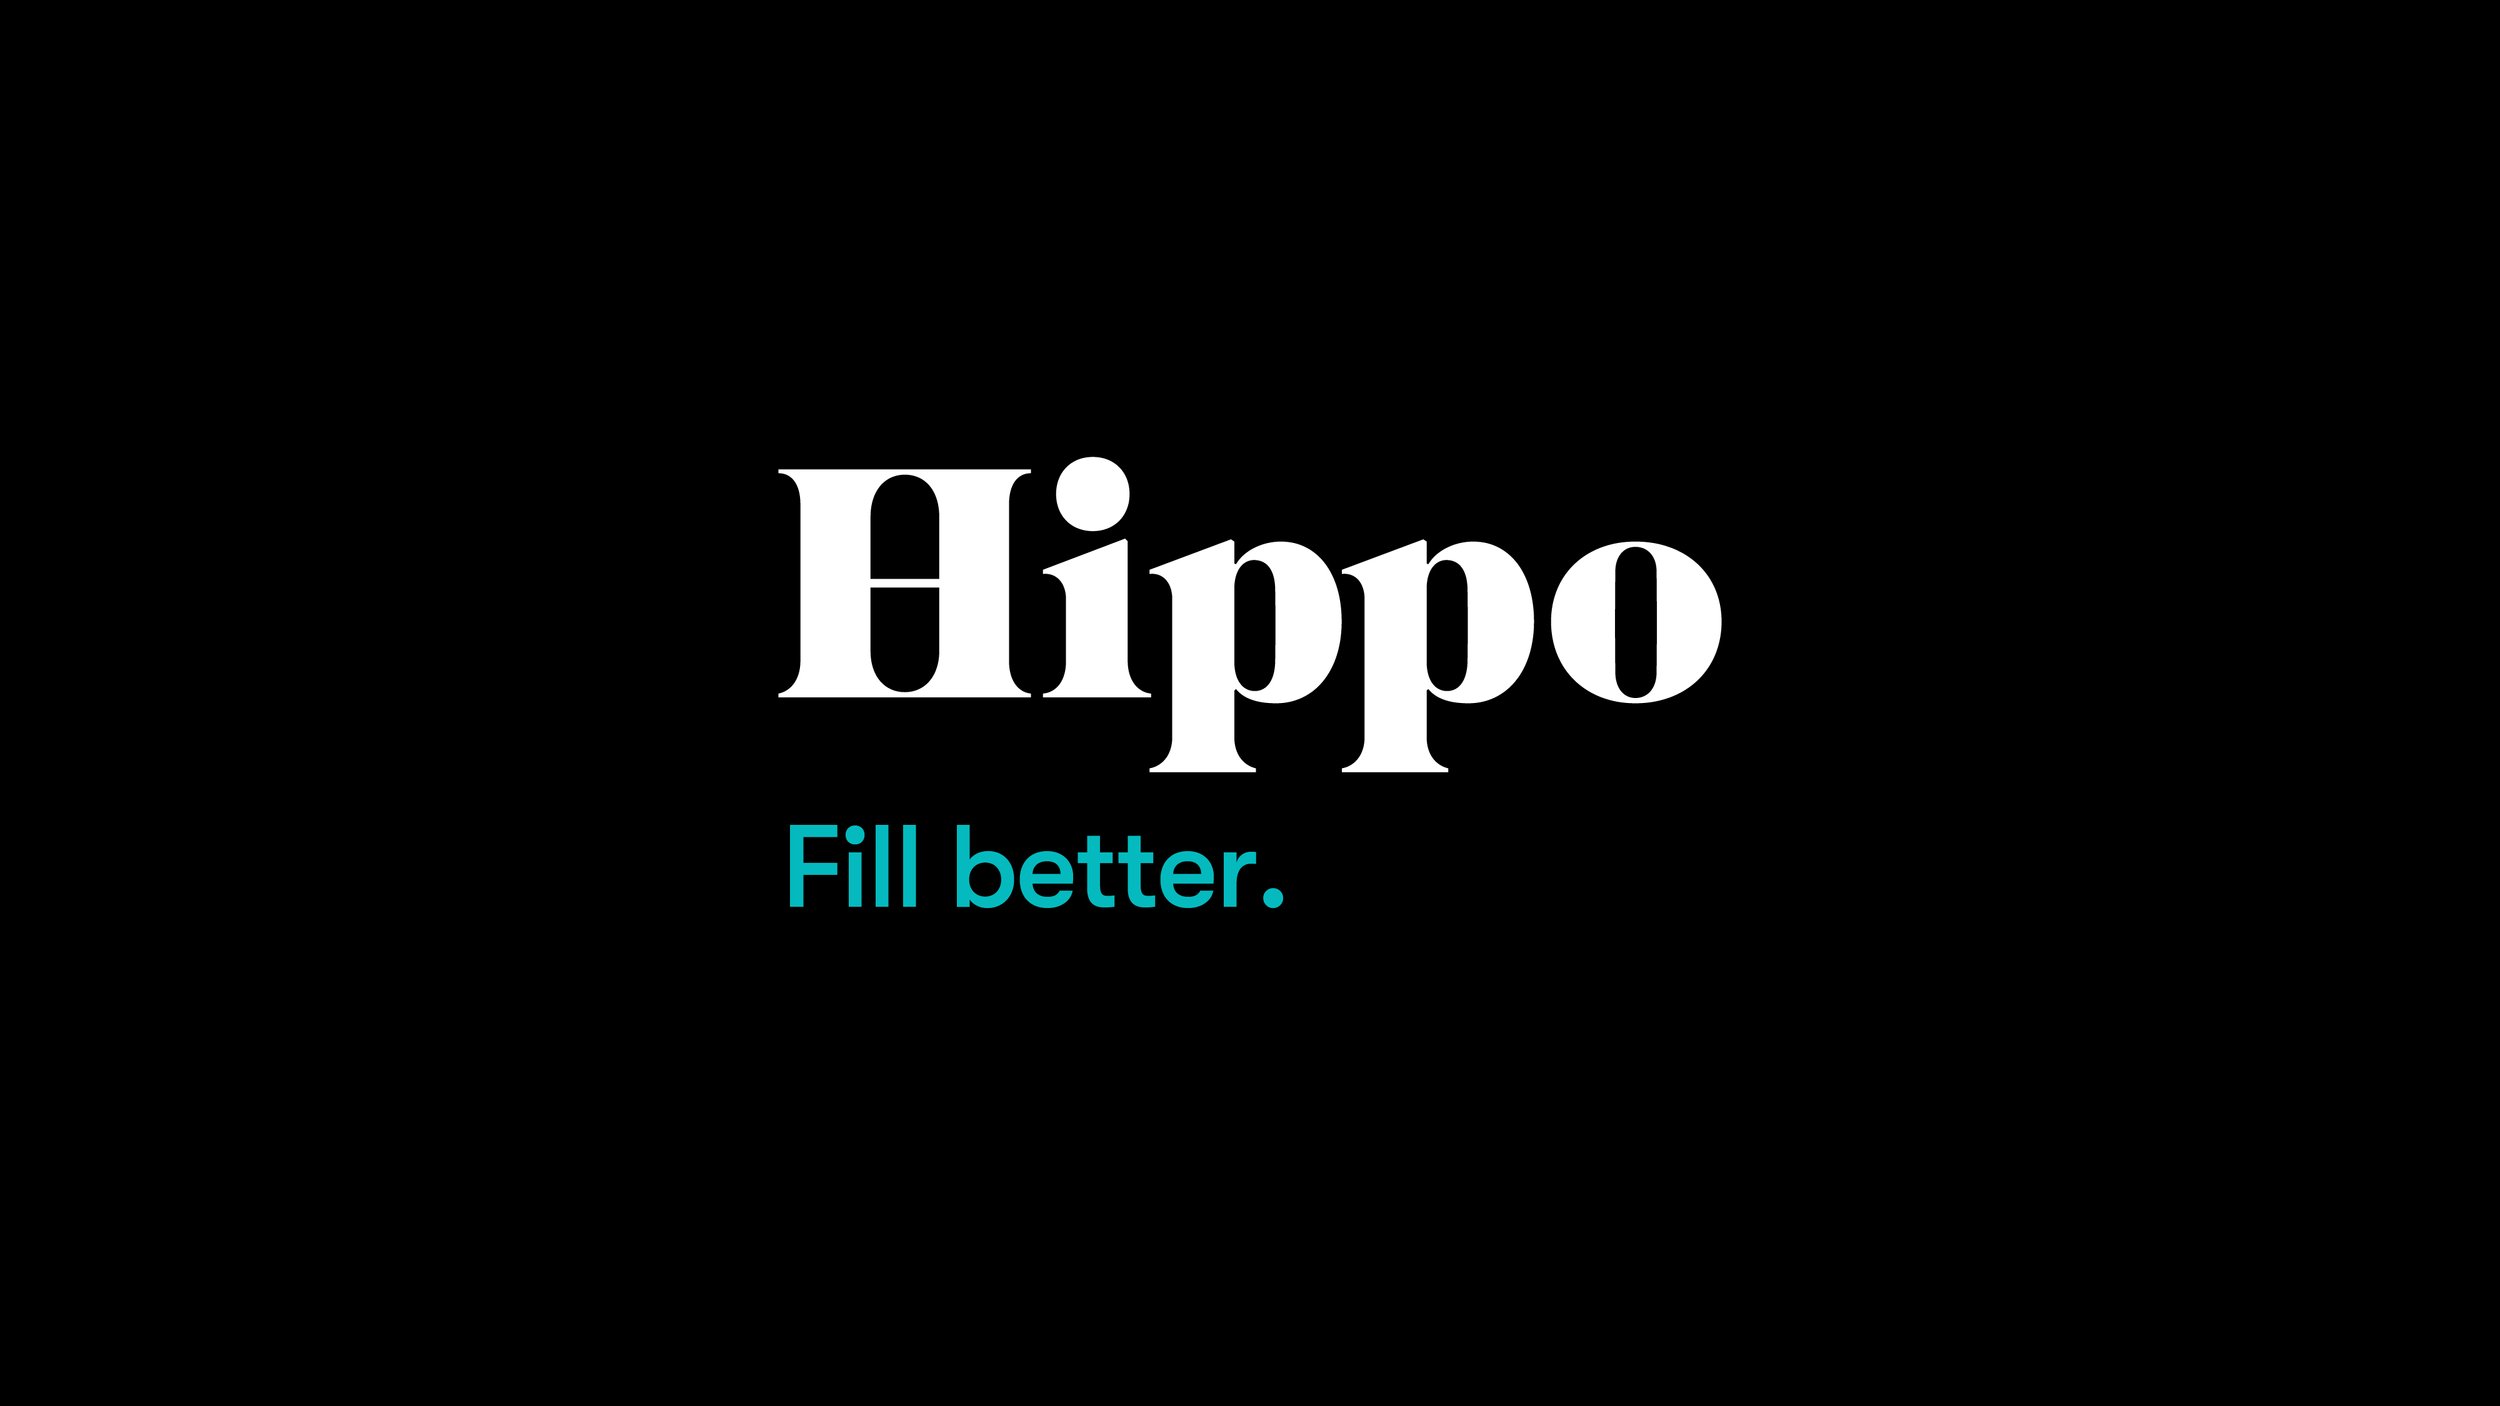 Hippo logotype and tagline.jpg